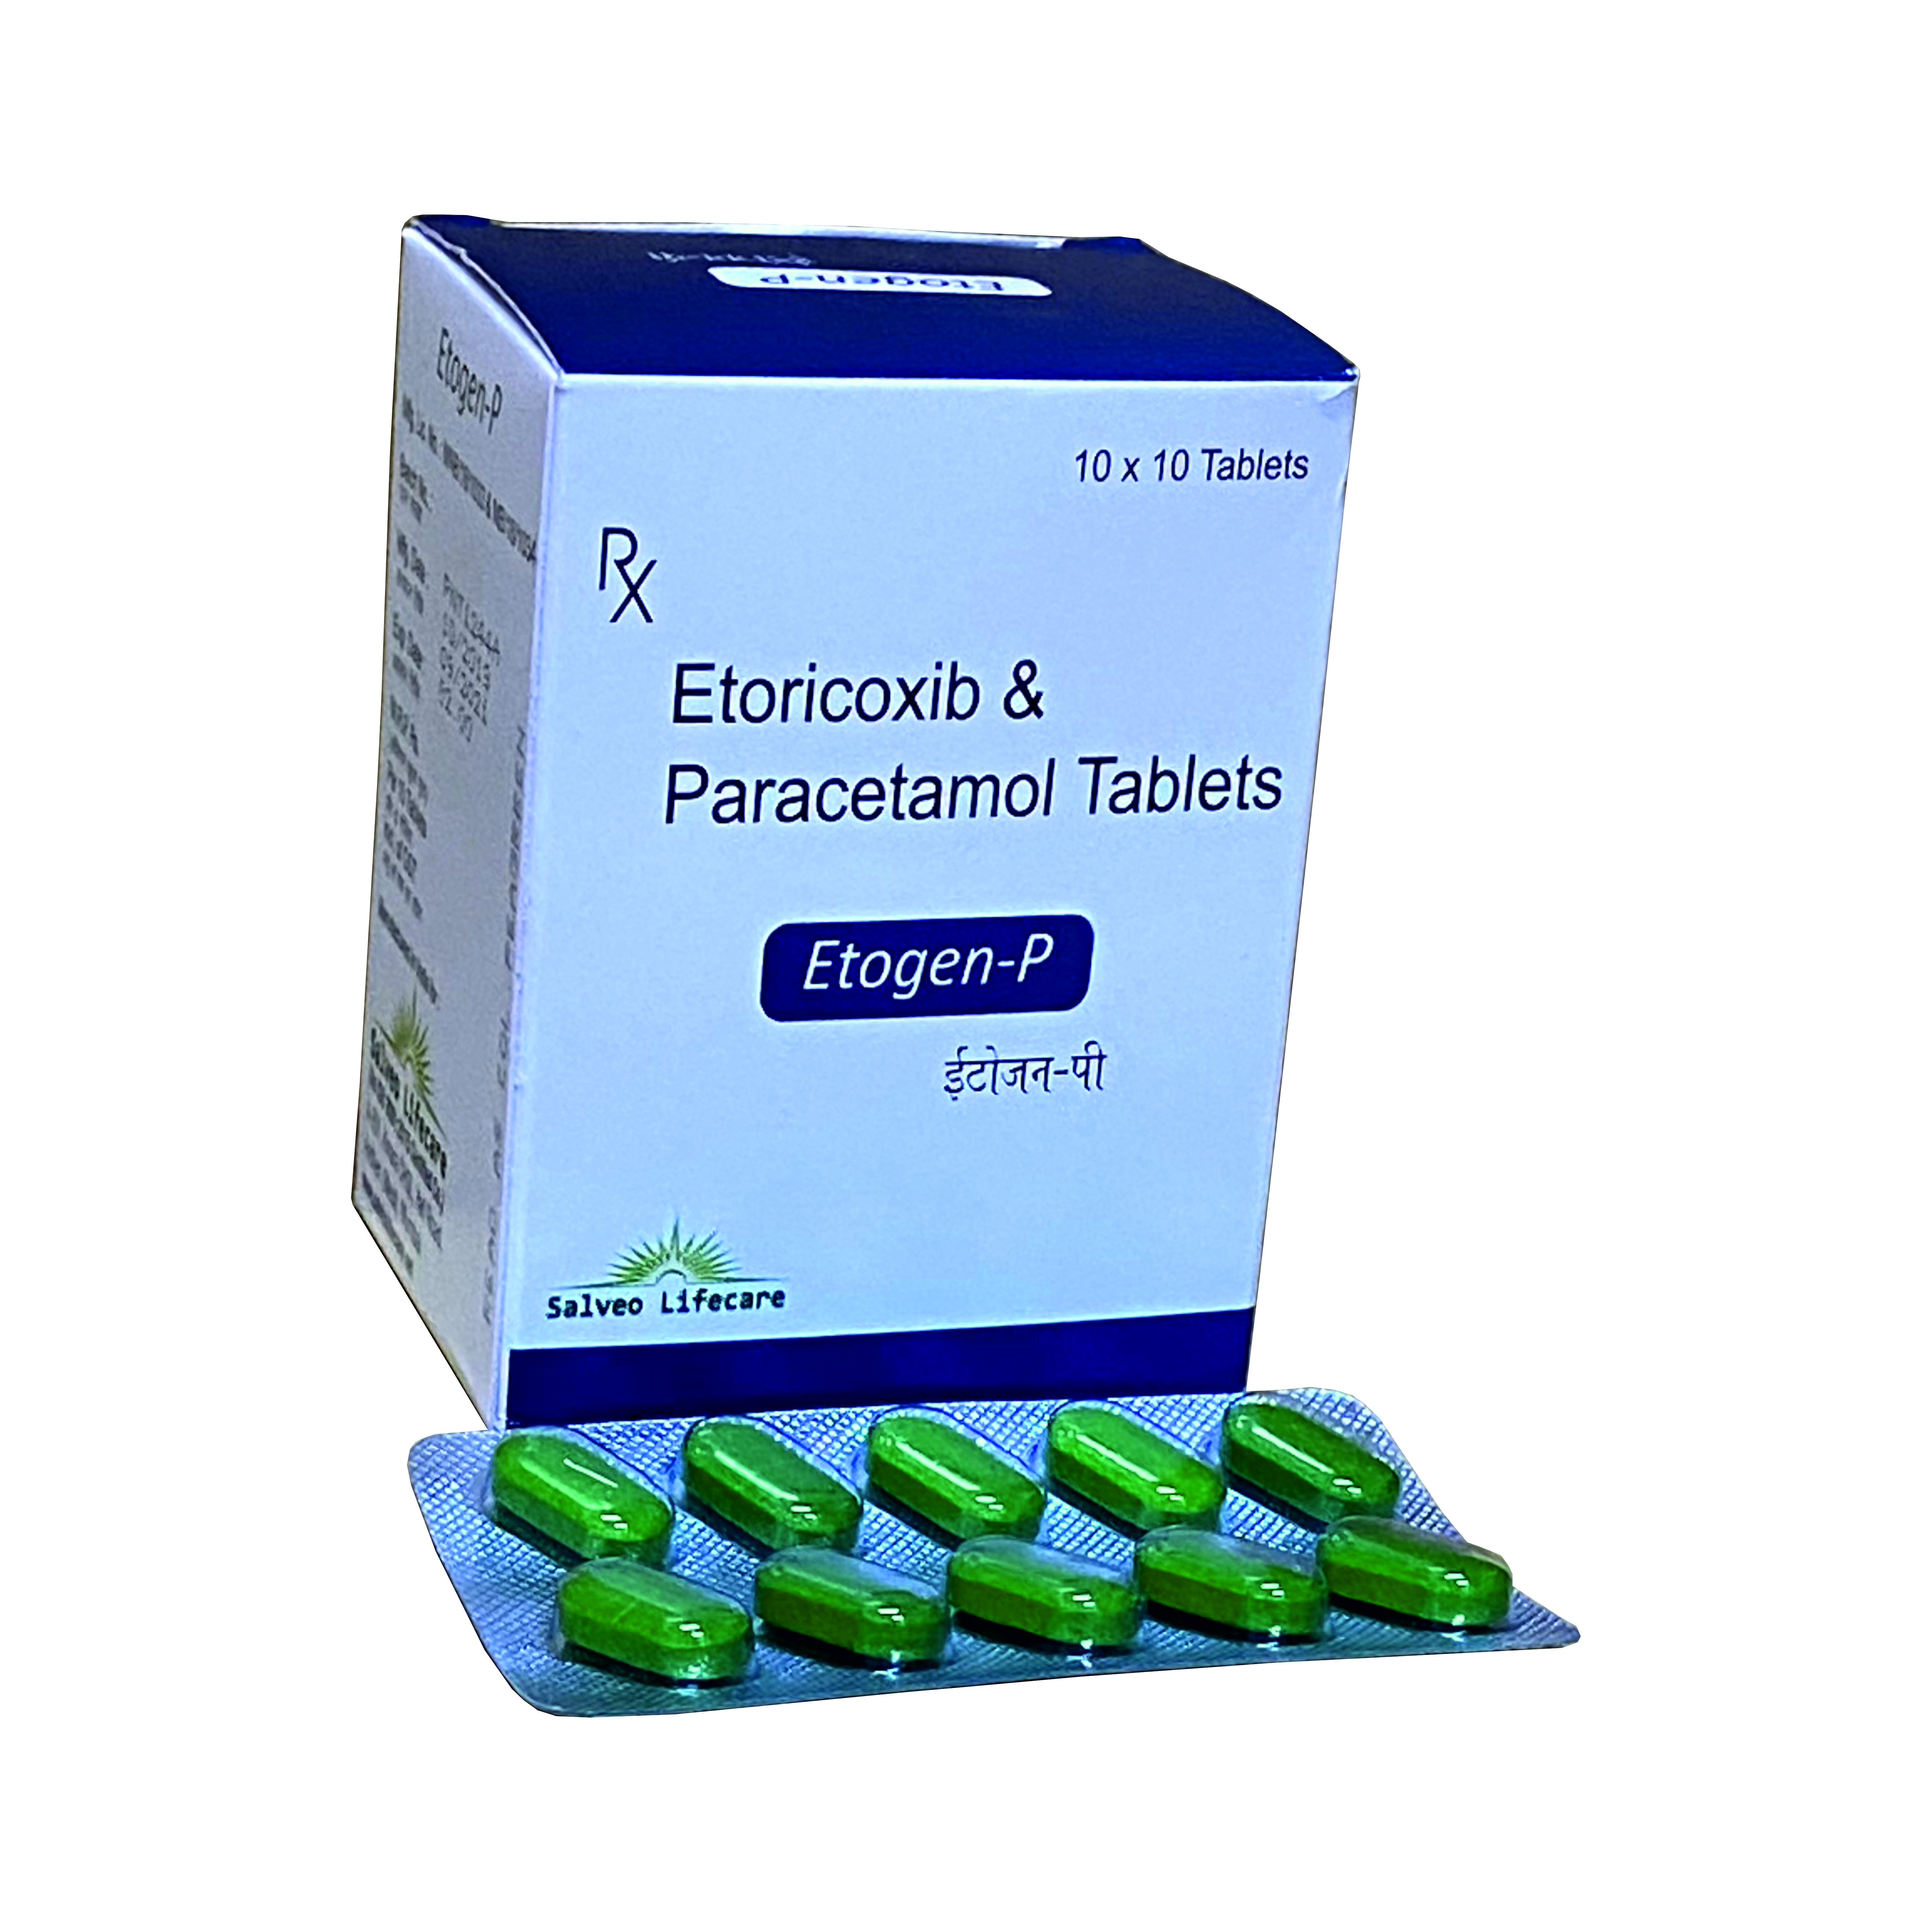 etoricoxib-60 mg, paracetamol 325 mg